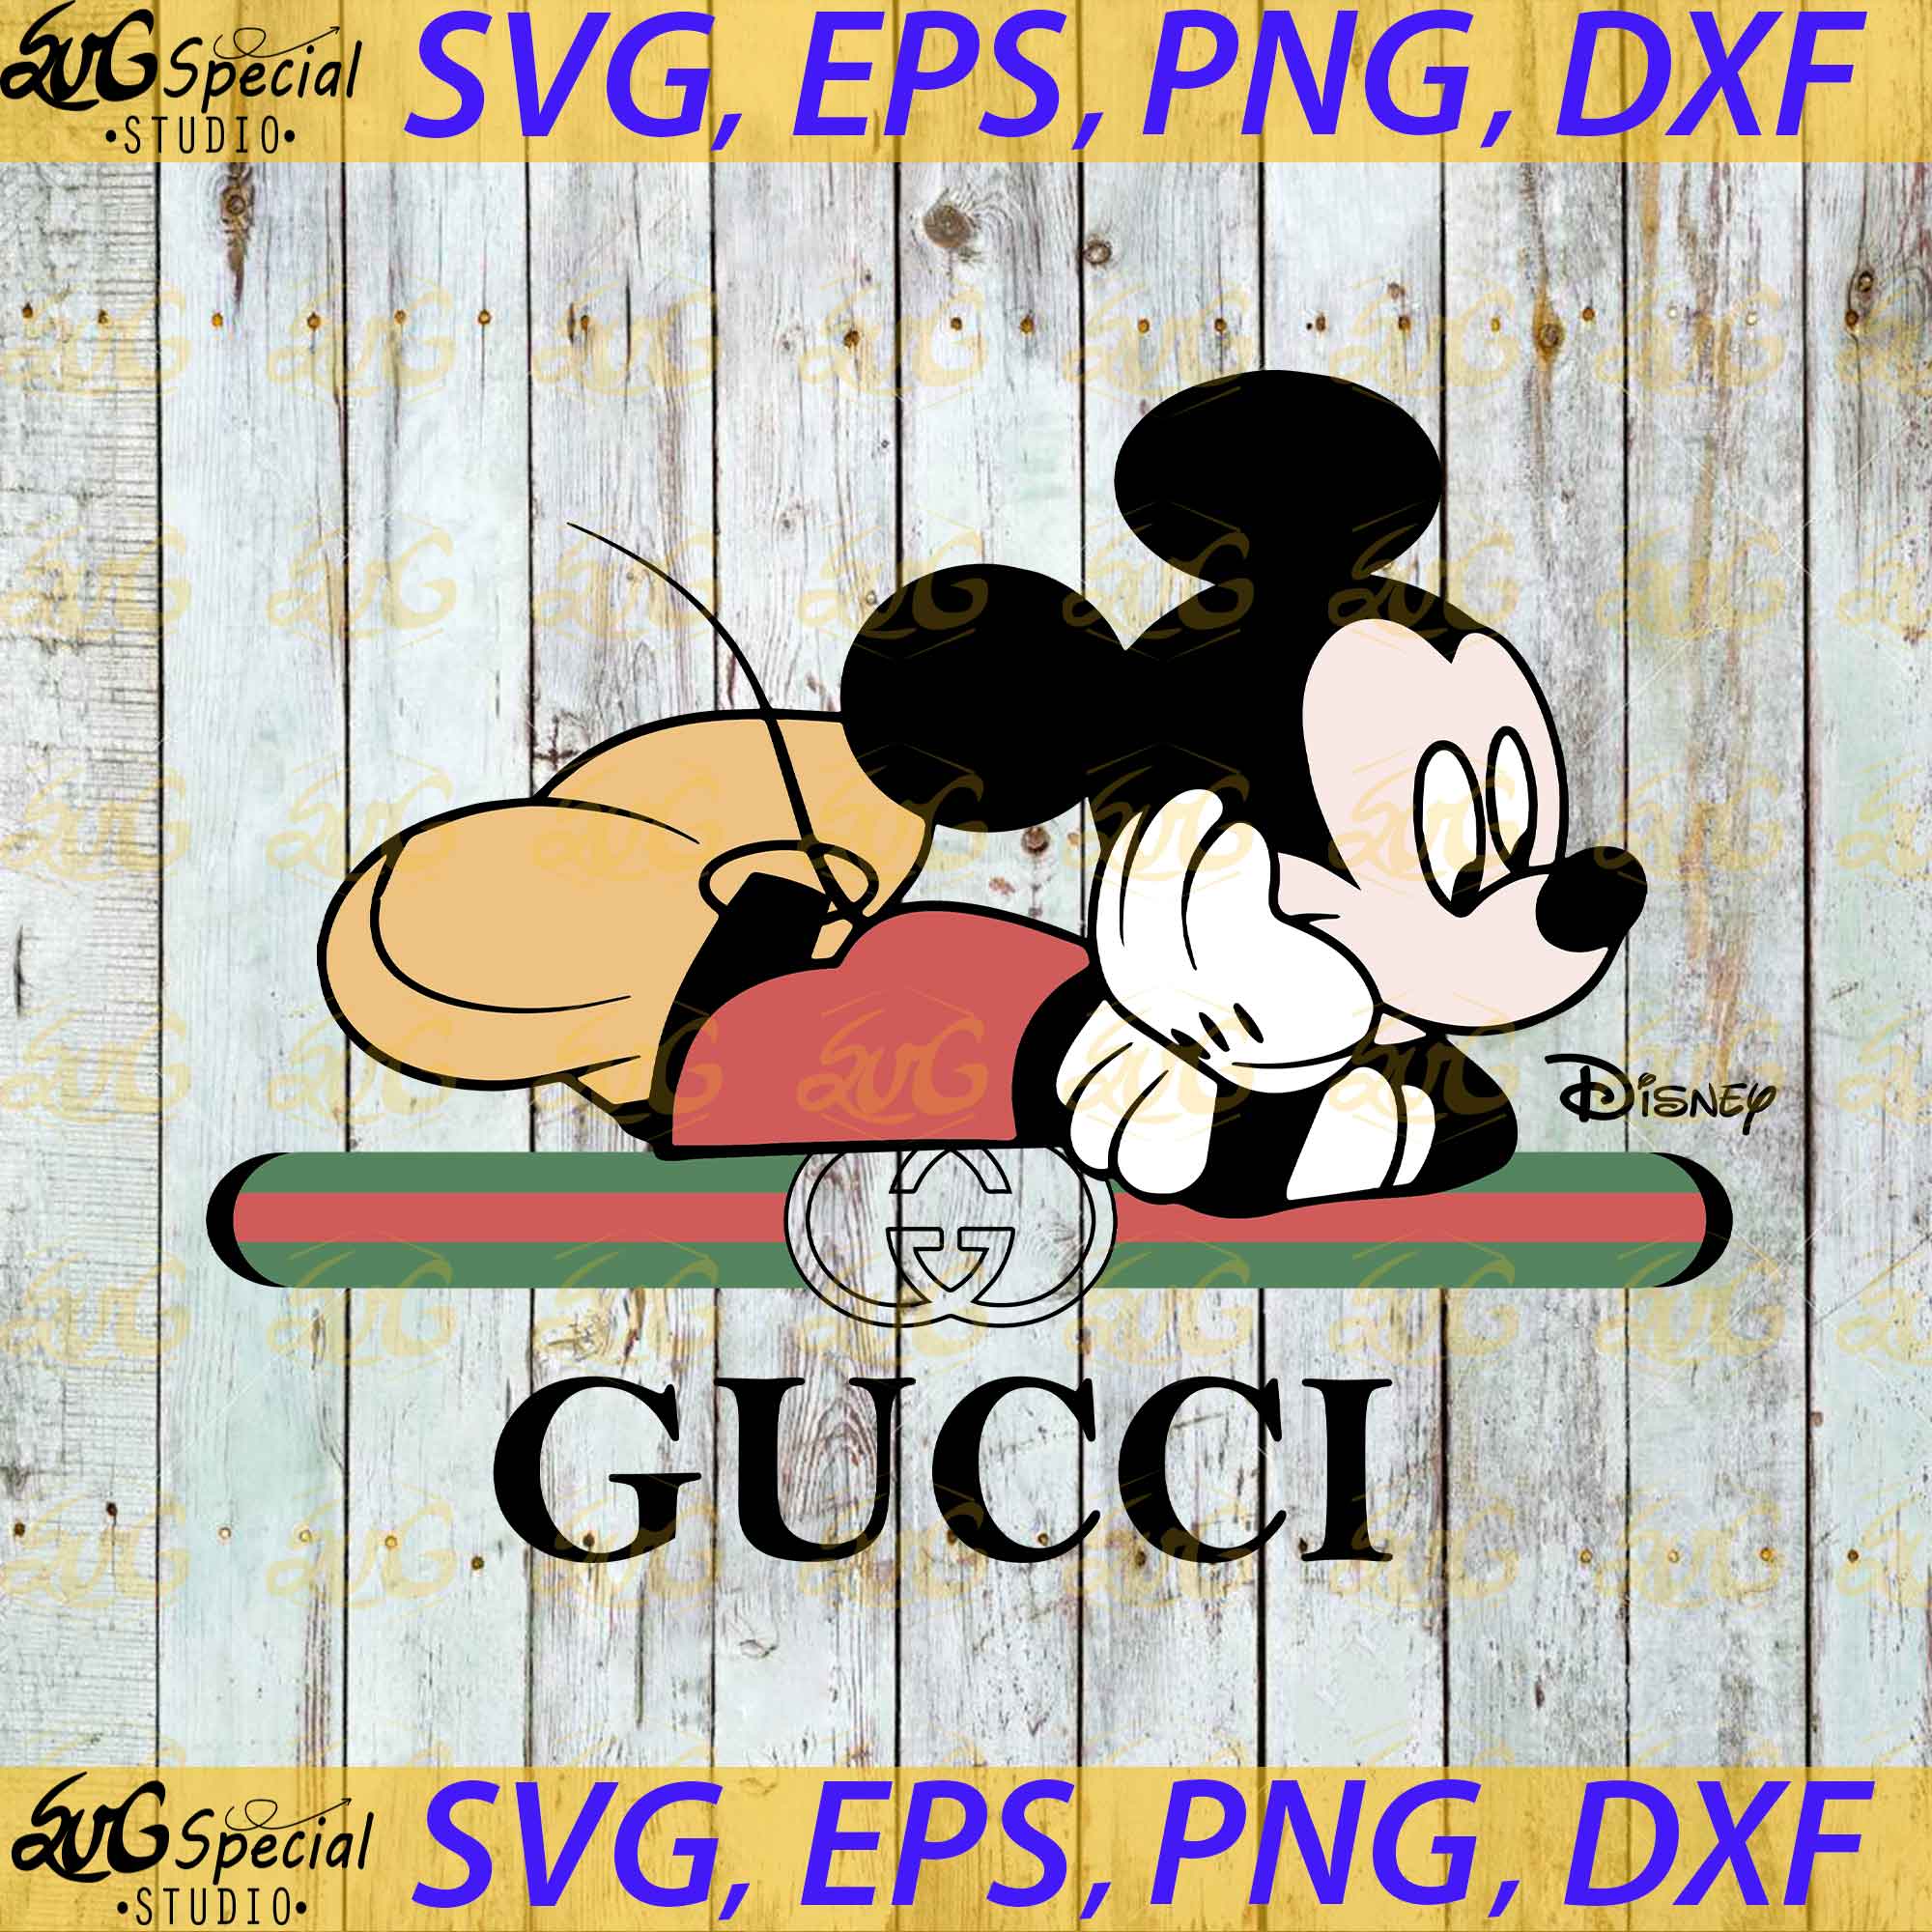 Buy Gucci Logo Vector Eps Png Files